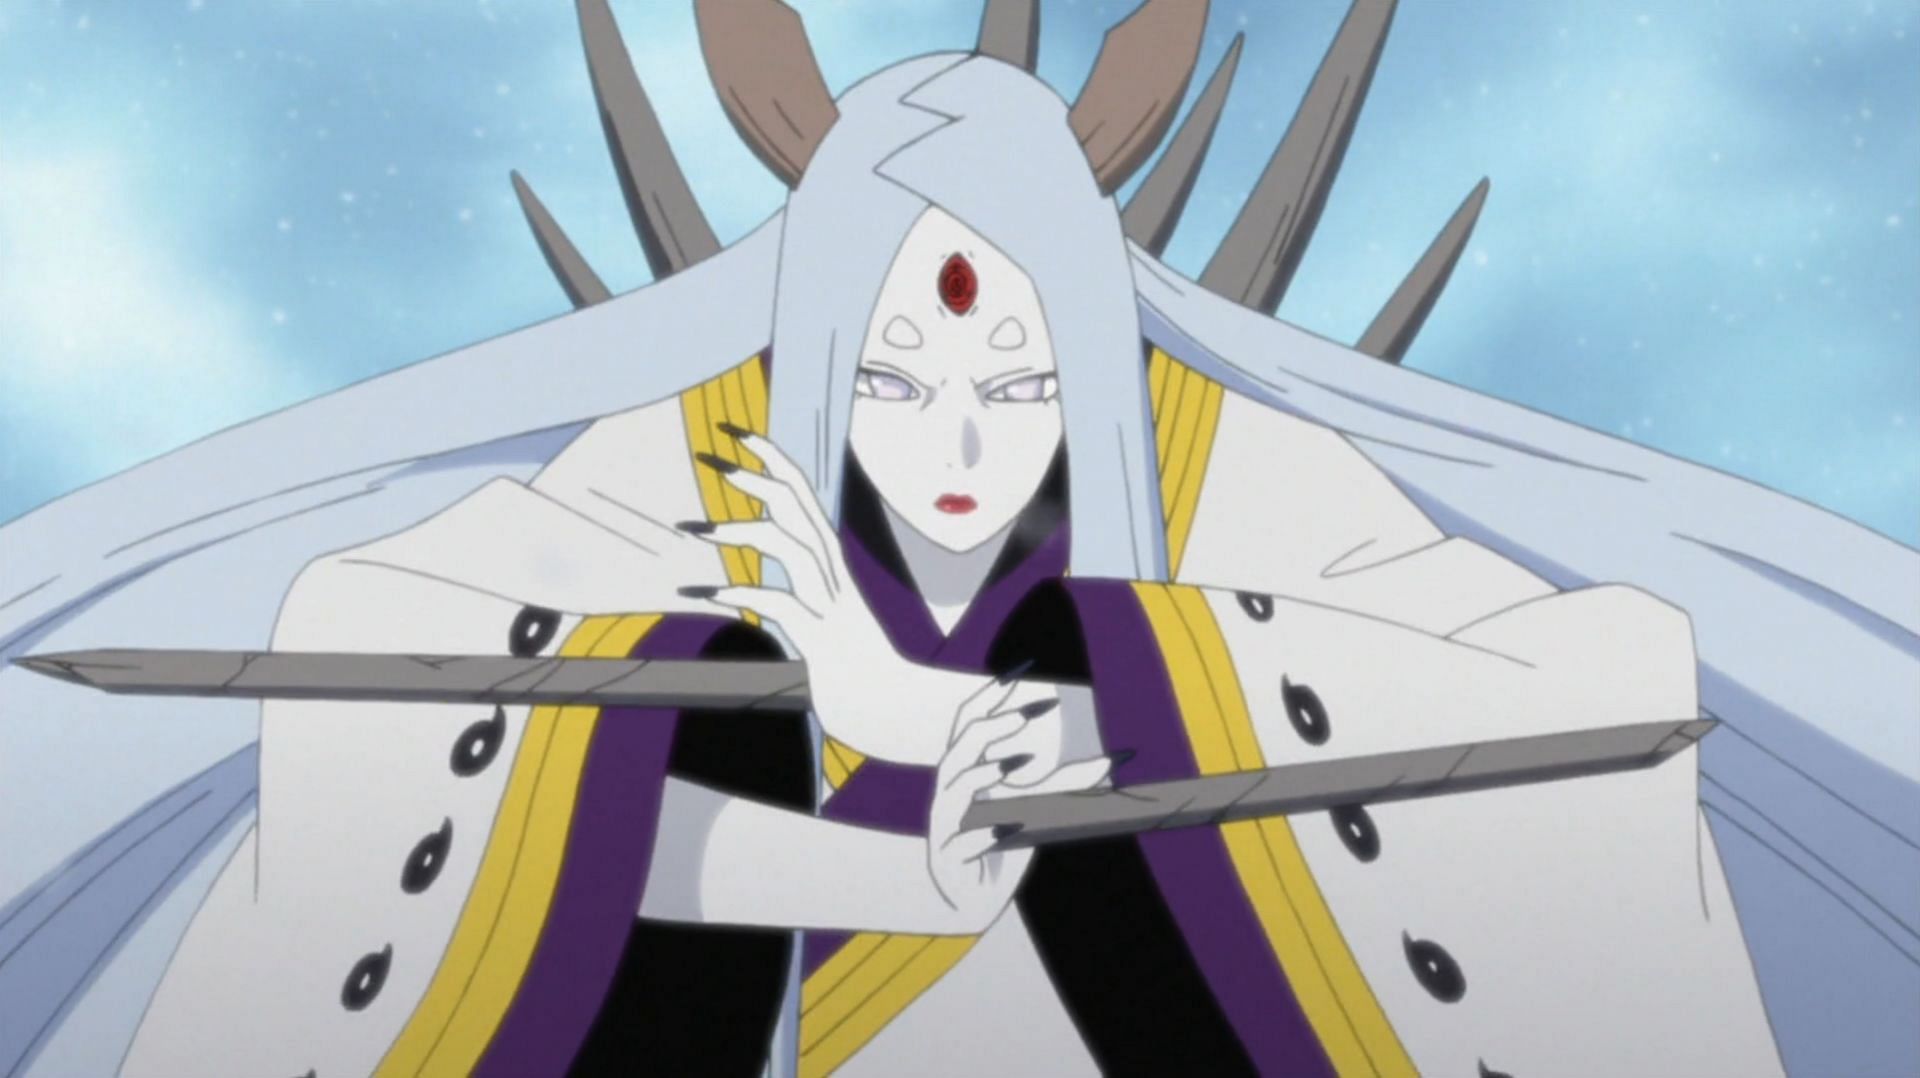 Kaguya Otsutsuki, as seen in the anime Naruto (Image via Ufotable)